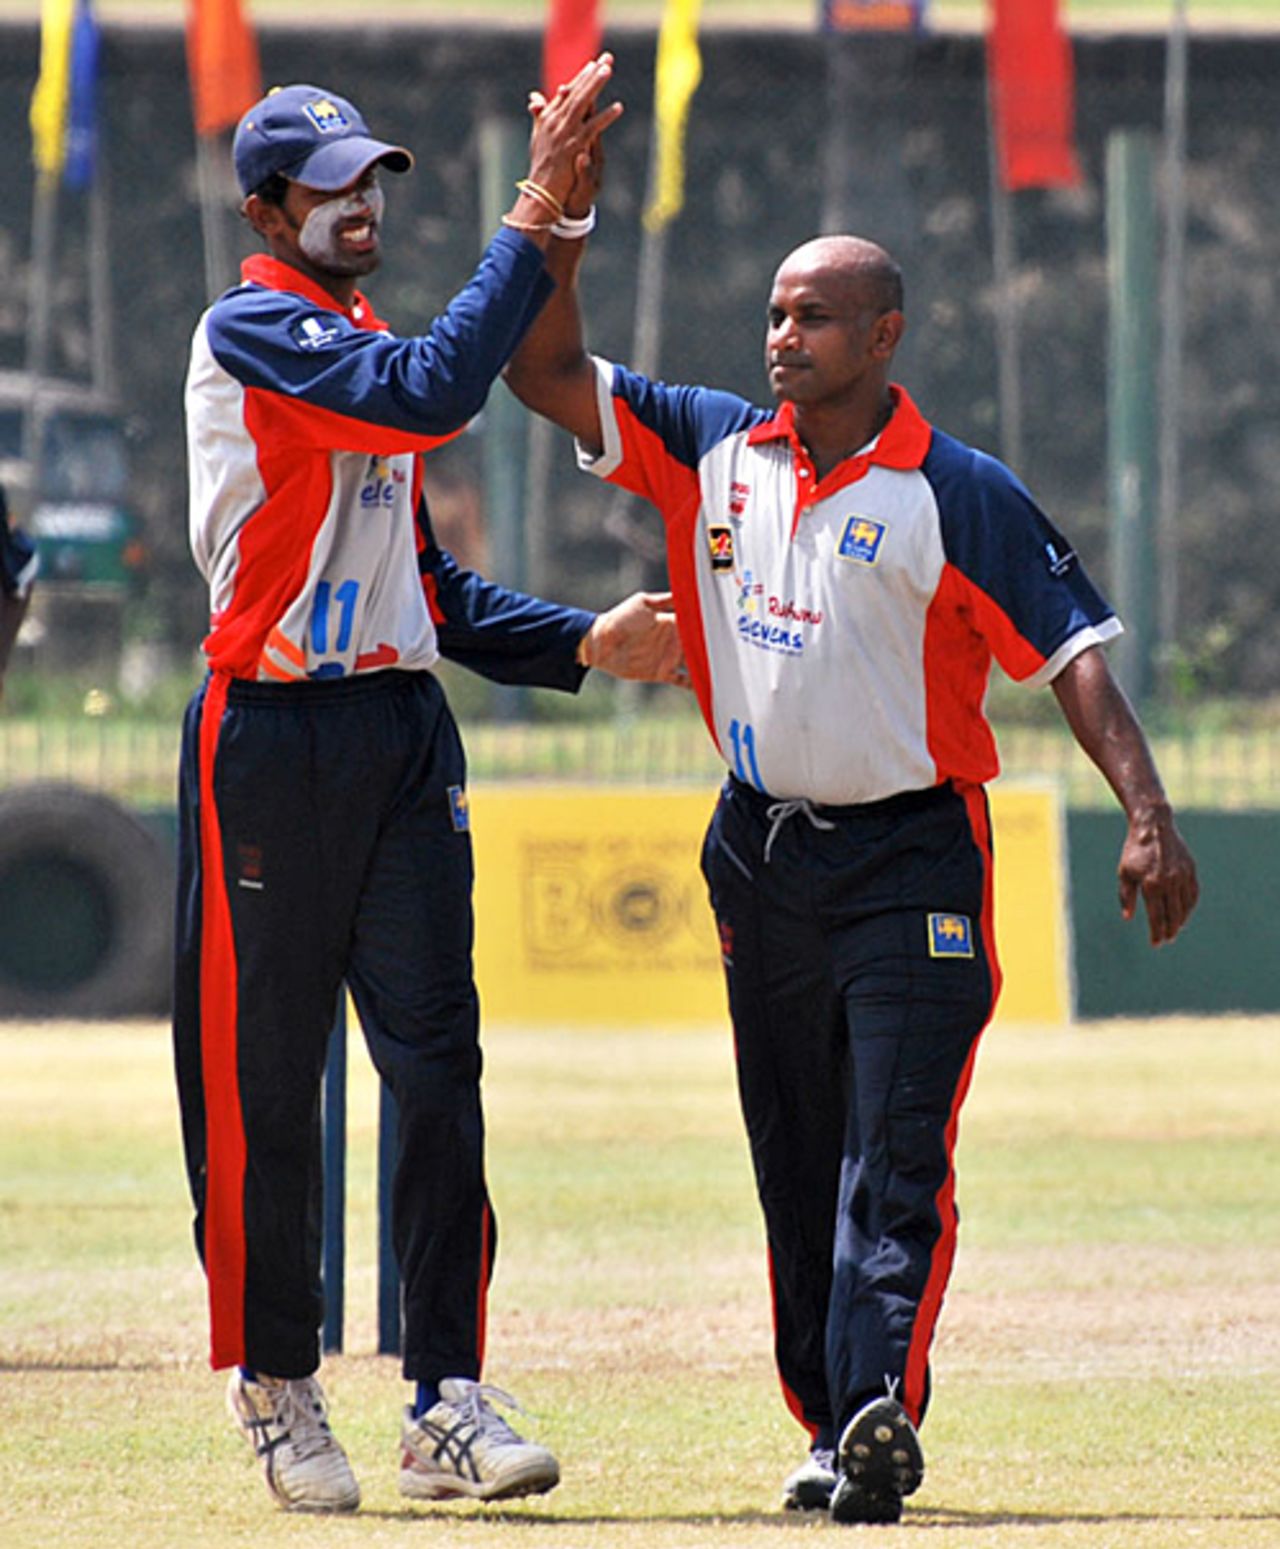 Sanath Jayasuriya picked up two wickets, Basnahira South v Ruhuna, Sri Lanka Cricket Inter-Provincial Twenty20 Tournament, Galle, March 4, 2010